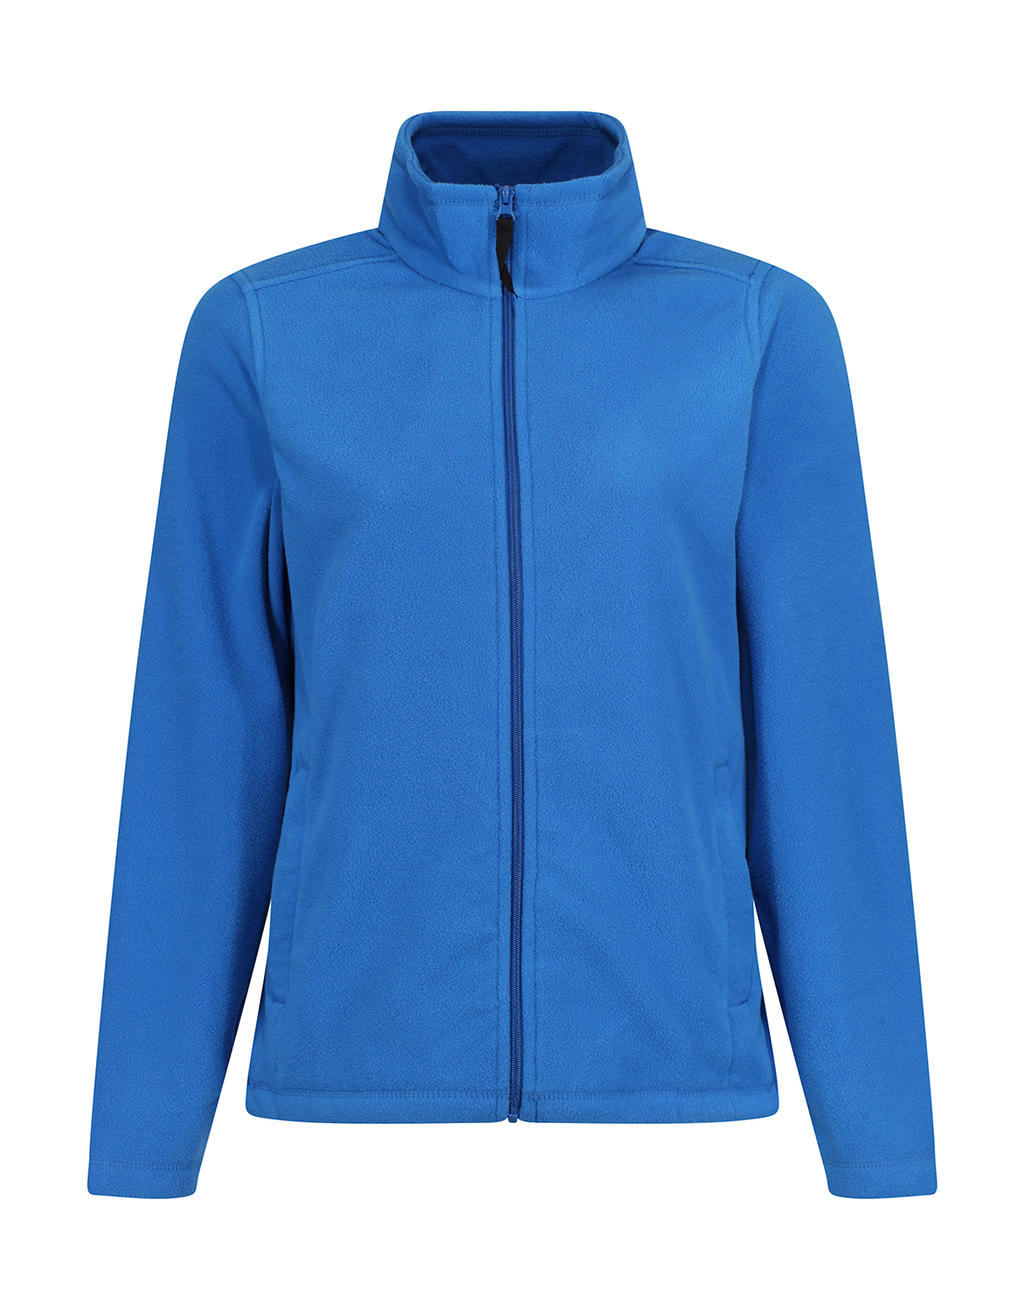  Womens Micro Full Zip Fleece in Farbe Oxford Blue